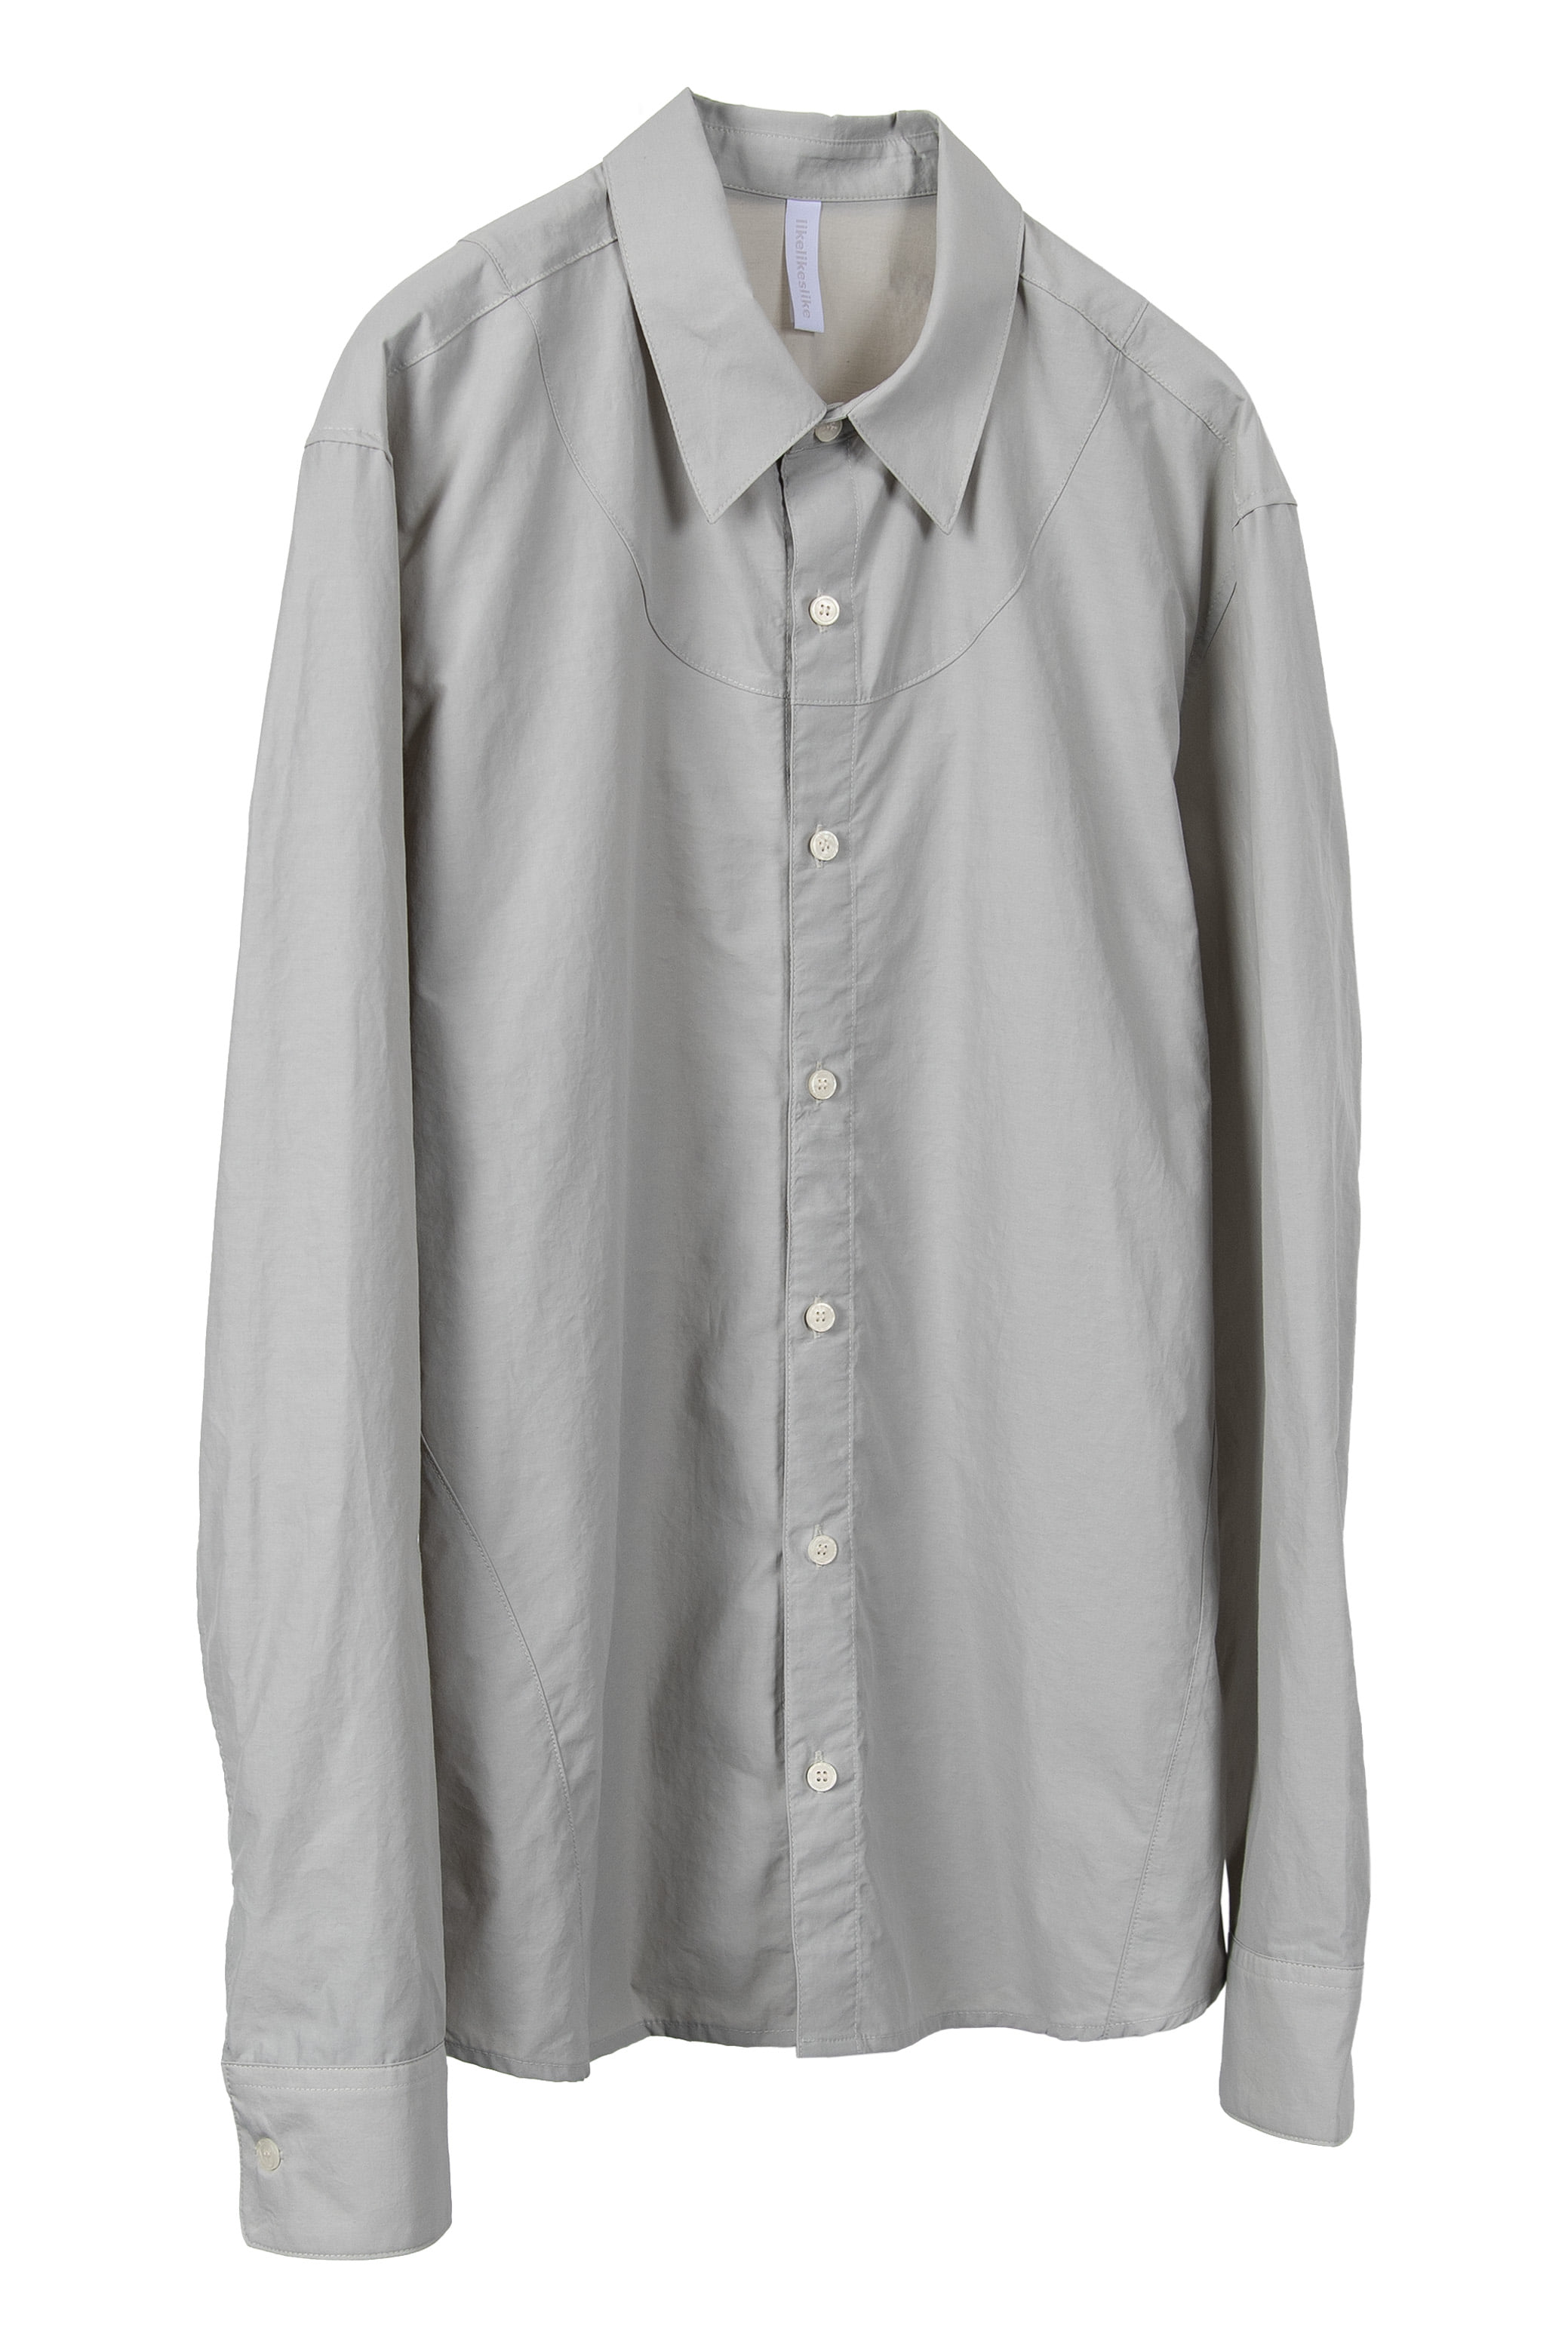 shirt, prototype model, grey